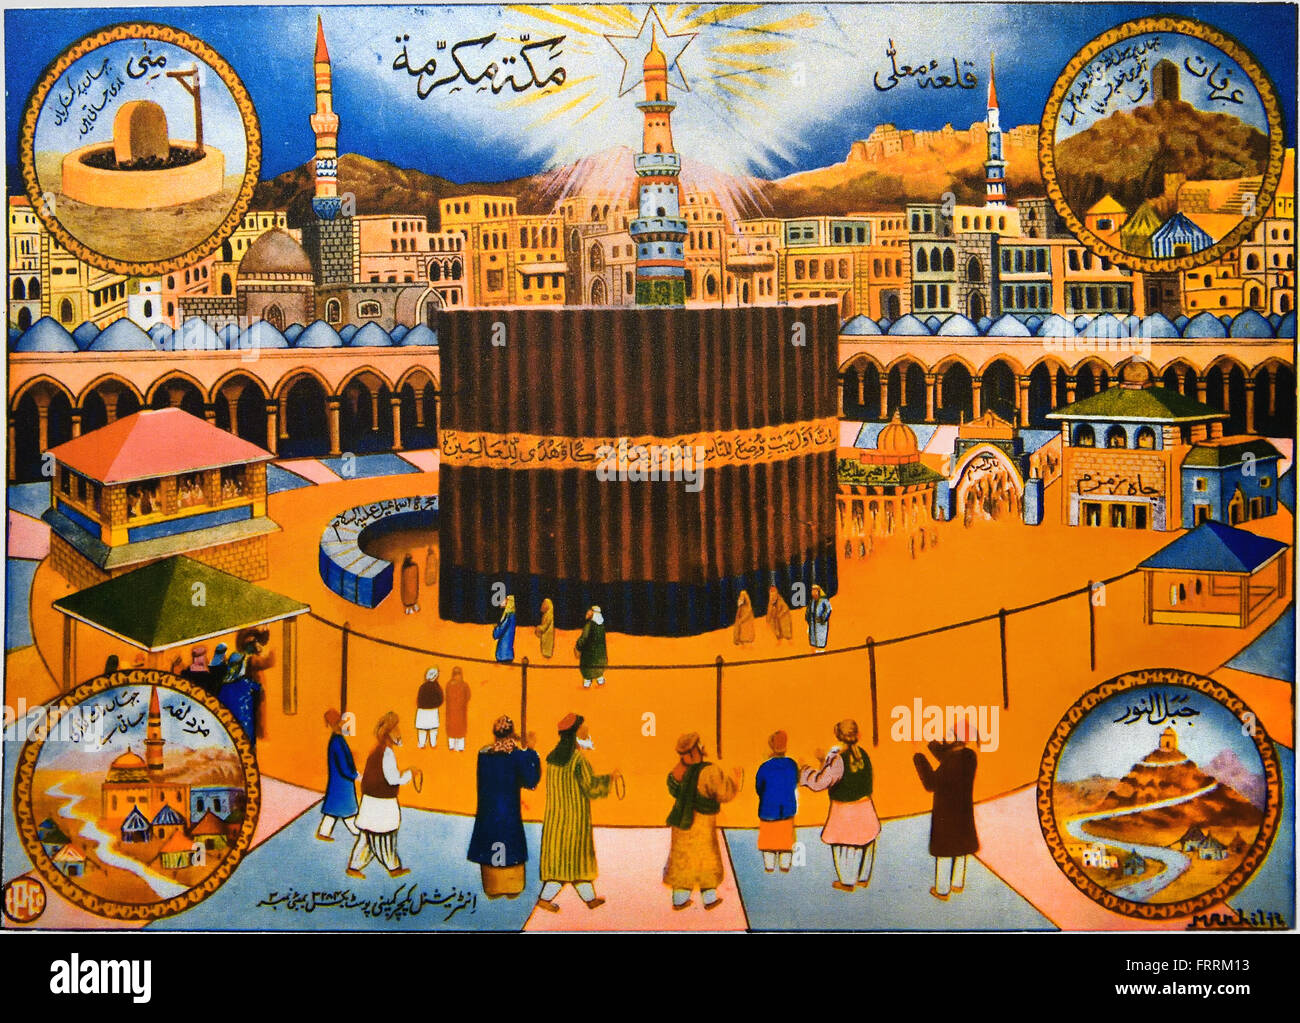 Imprimir representando la Ka'aba la Kaaba en La Meca ( ) India 1930-1950 ( imagen religiosa de la Kaaba, el santuario musulmán en La Meca ) Hejaz en Arabia Saudita Foto de stock